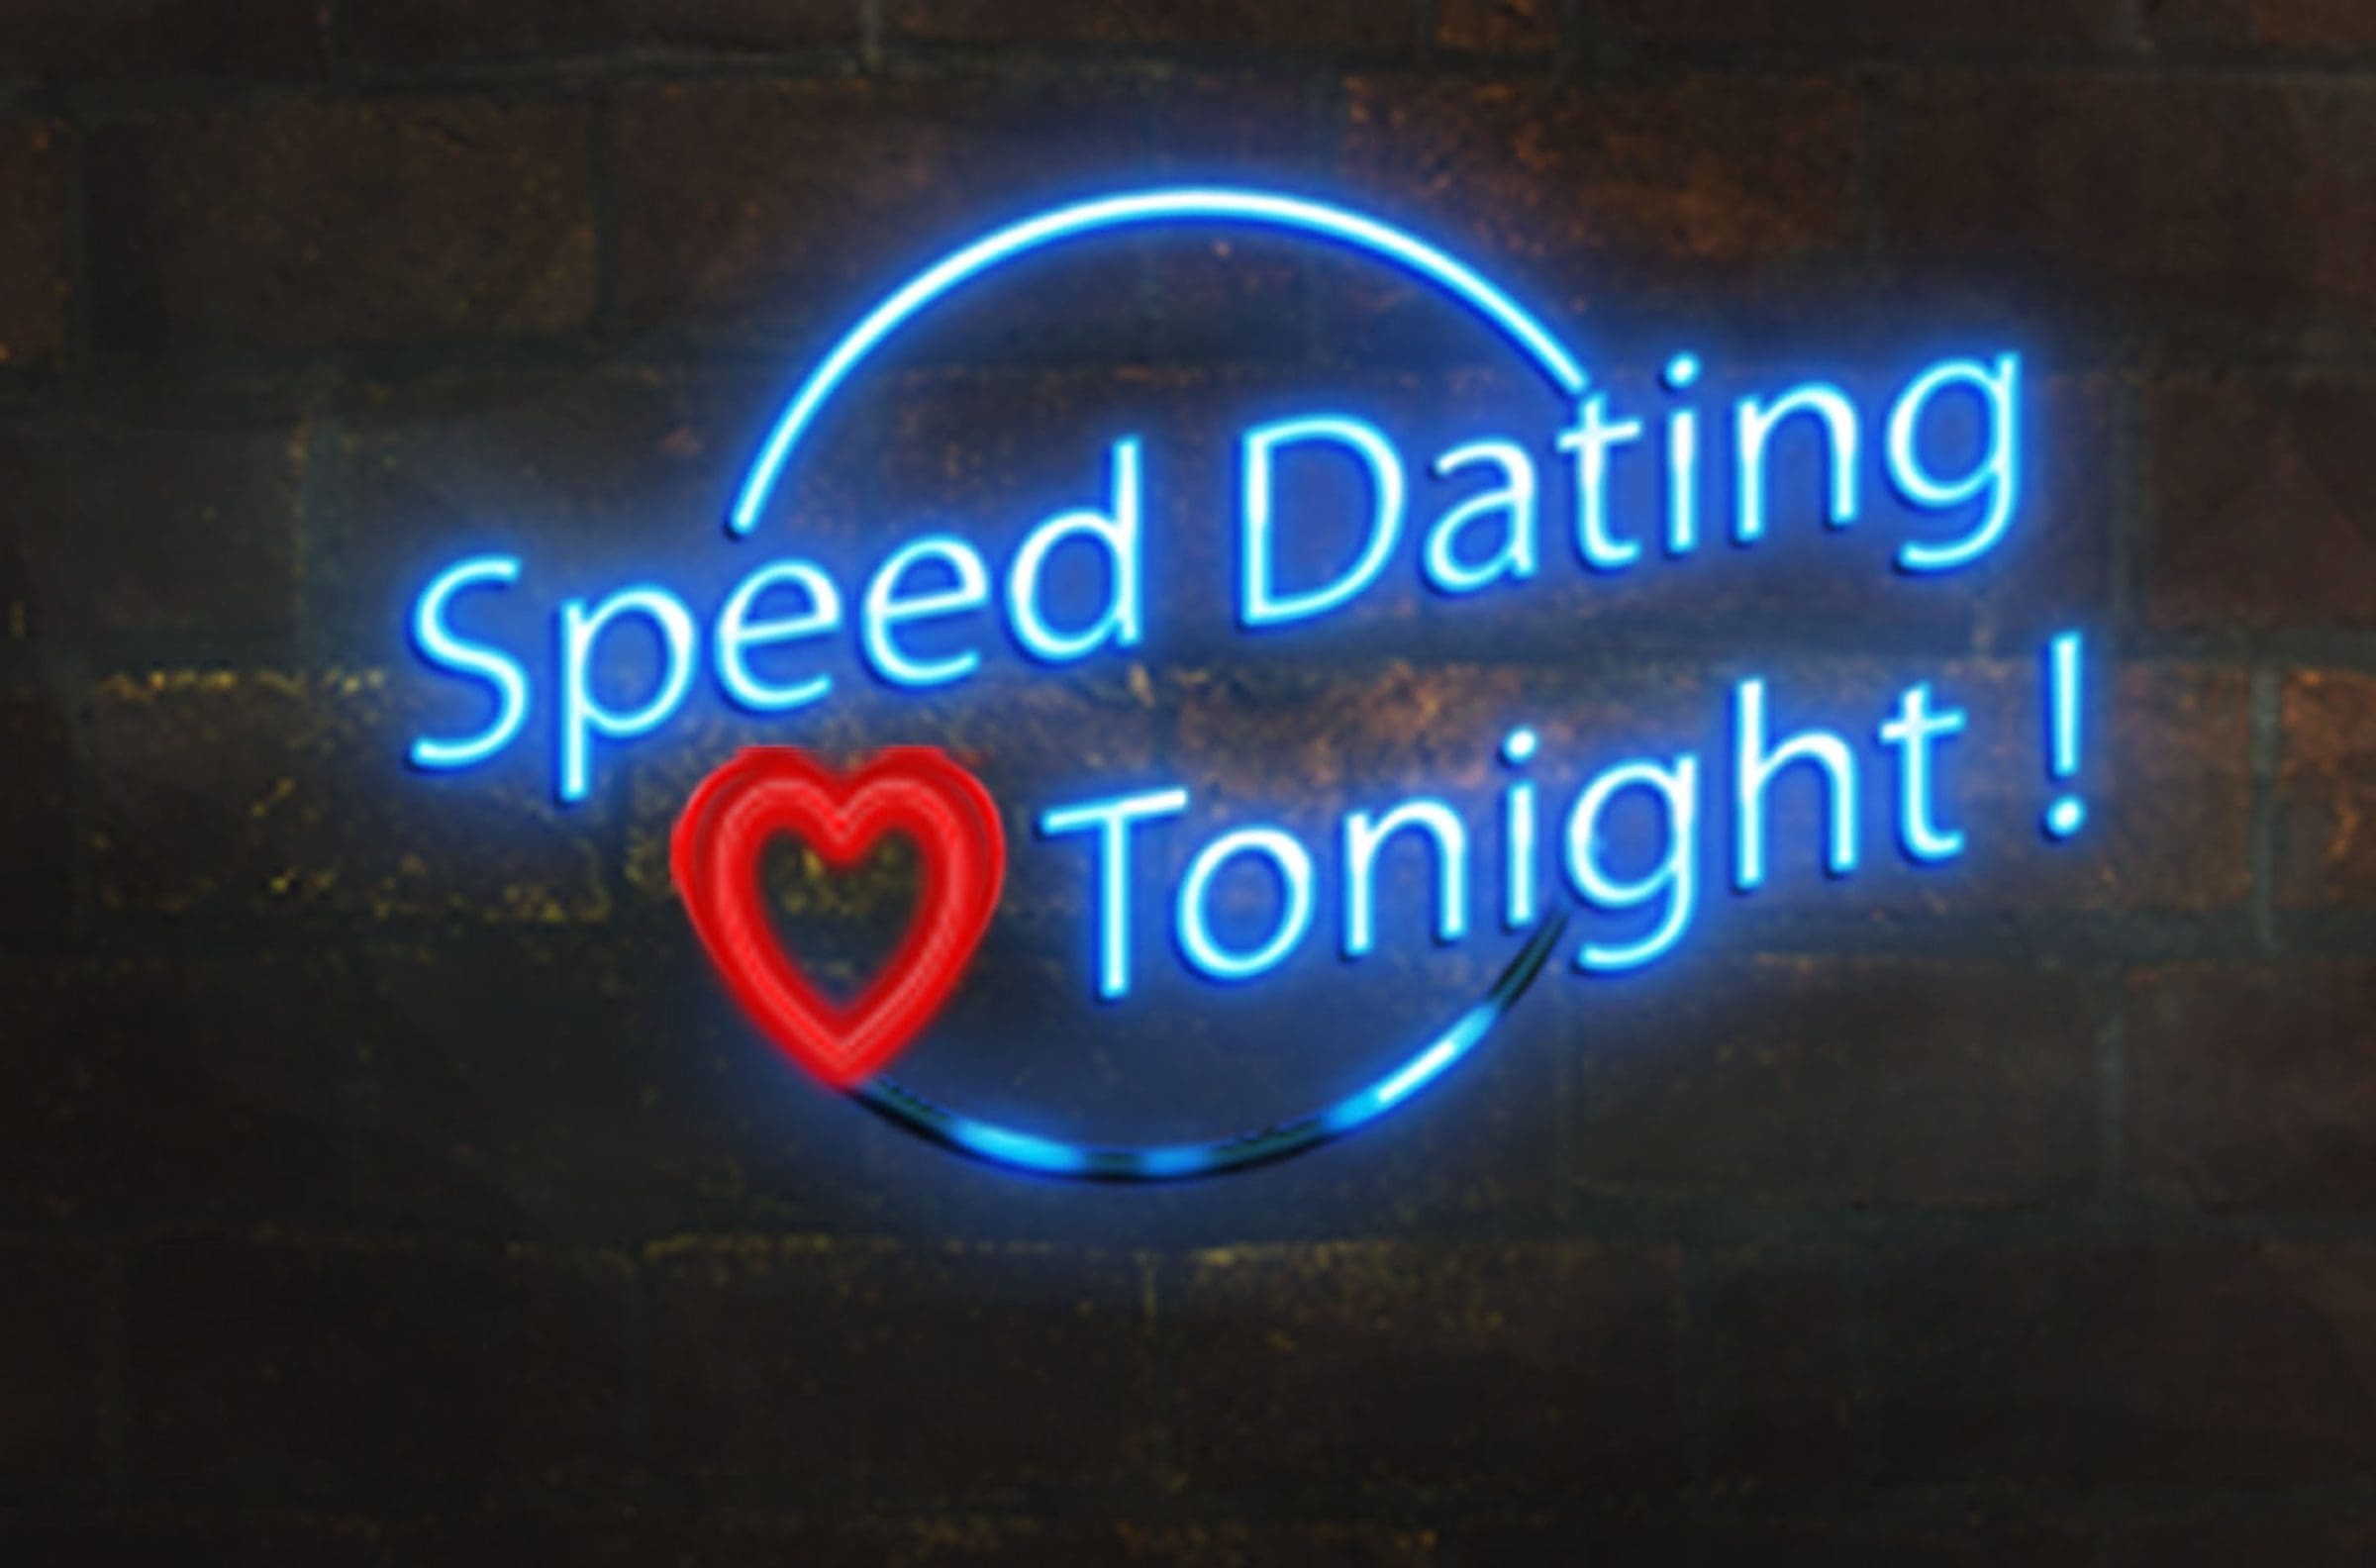 net speed dating philadelphia events this weekend